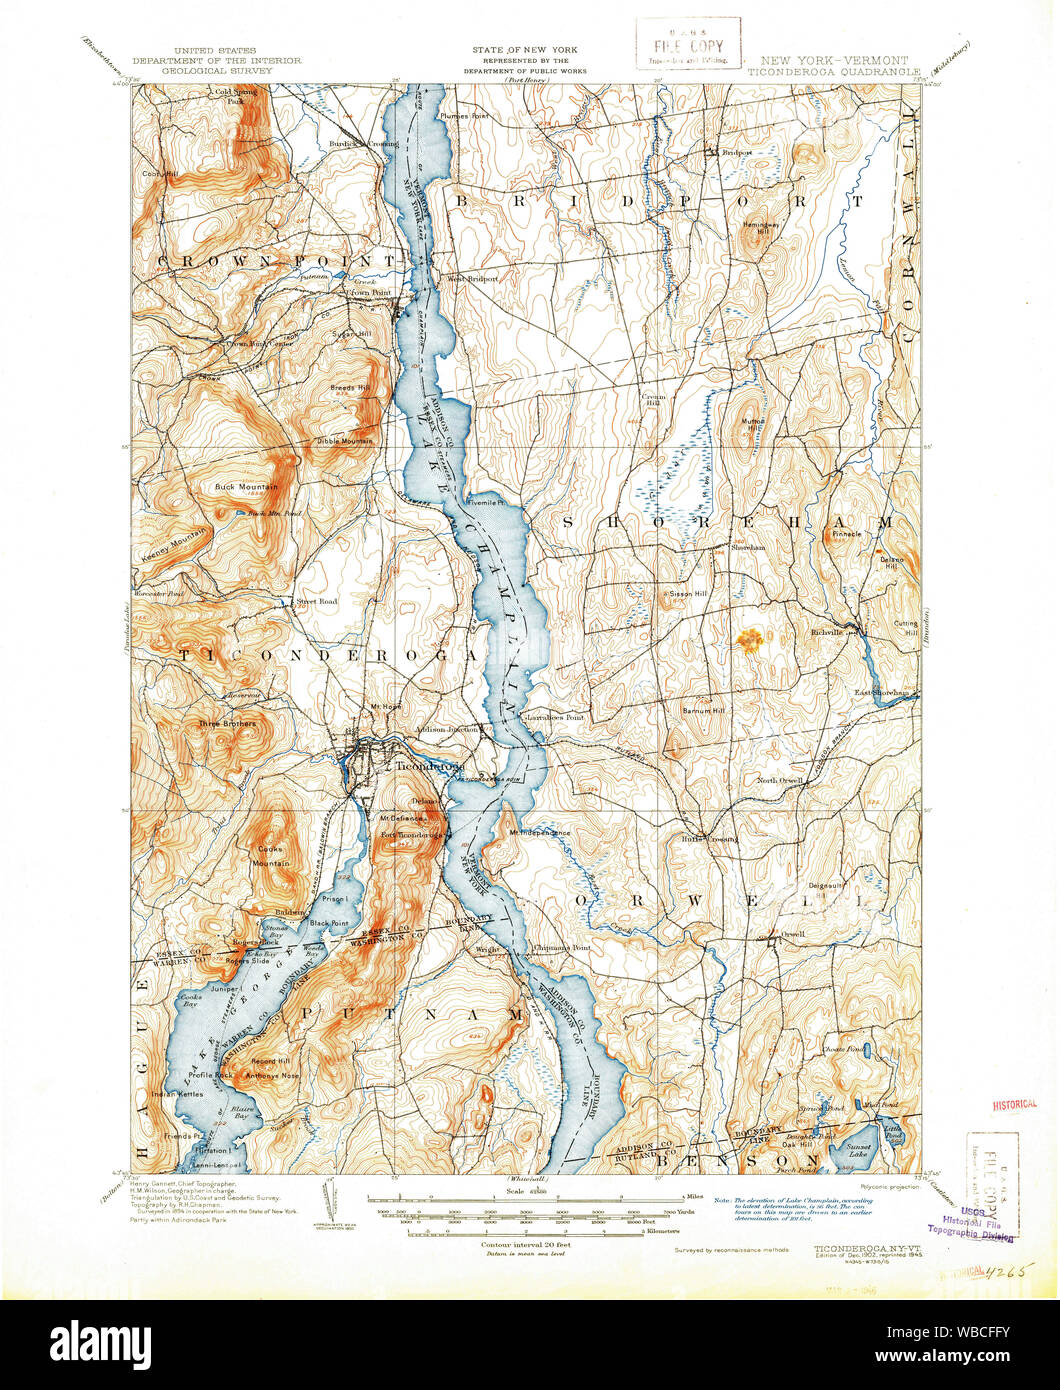 Fort Carillon at Ticonderoga, 1758 - Old Map Reprint - USA Jefferys 1768  Atlas 26 - OLD MAPS